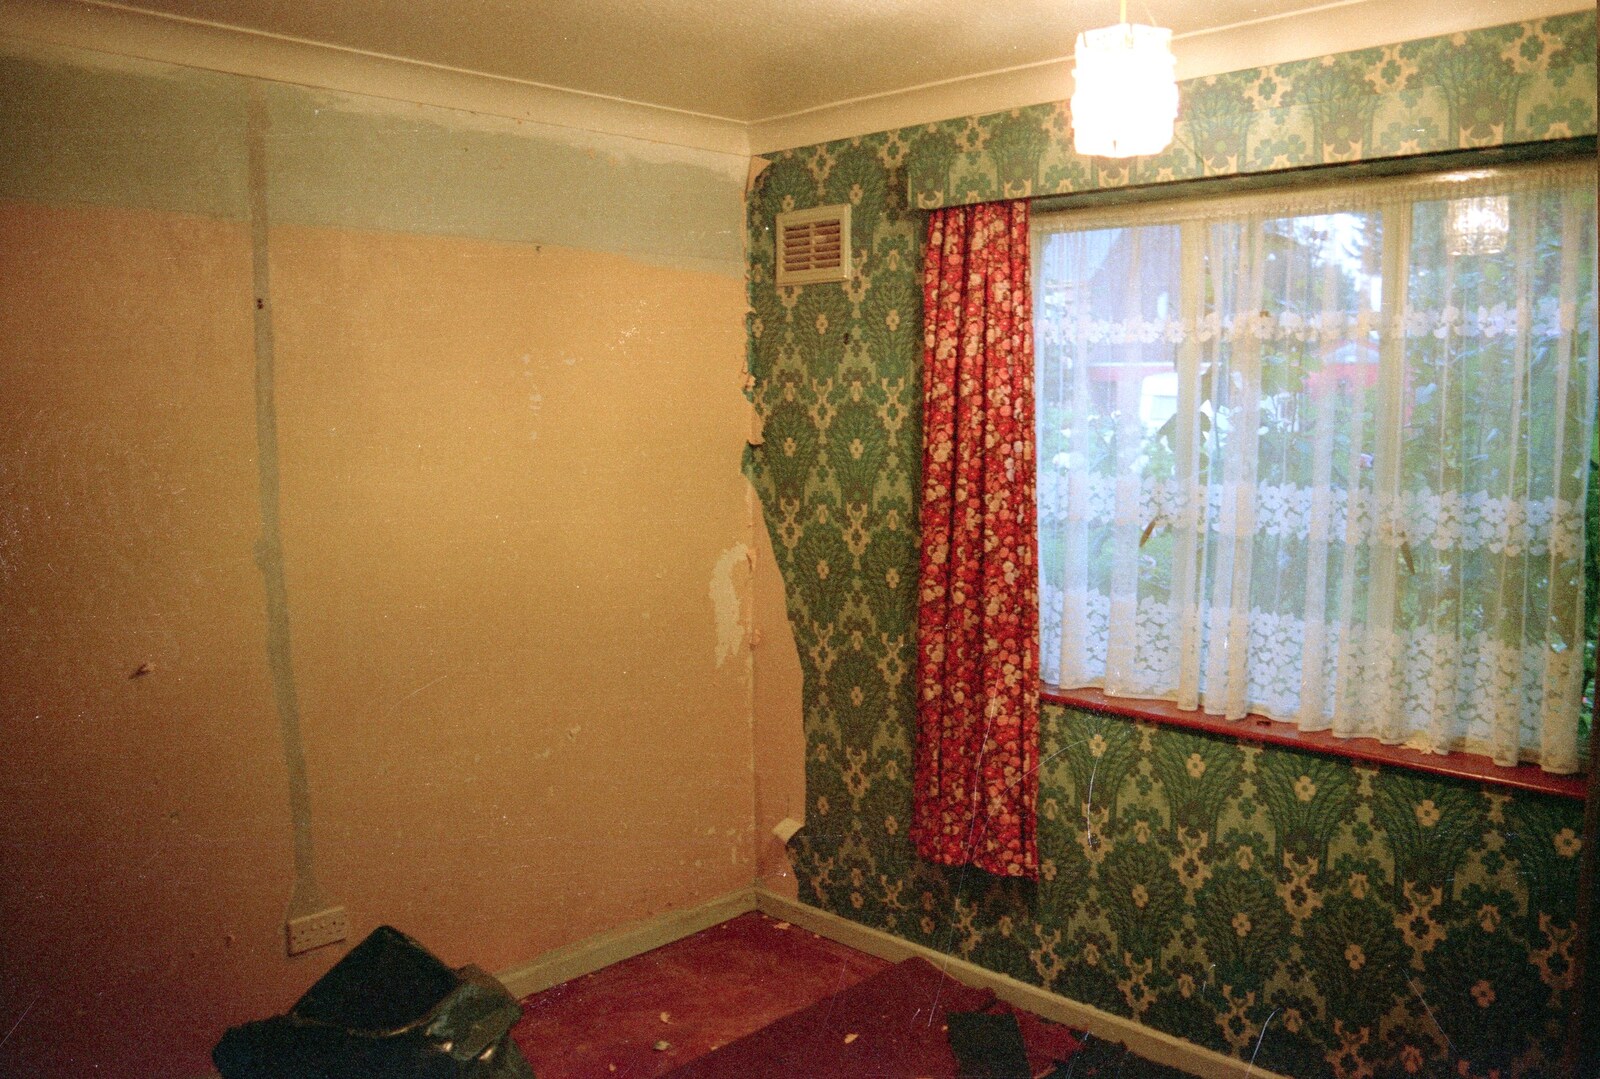 More grim wallpaper is stripped from Bracken Way, Walkford, Dorset - 15th September 1986